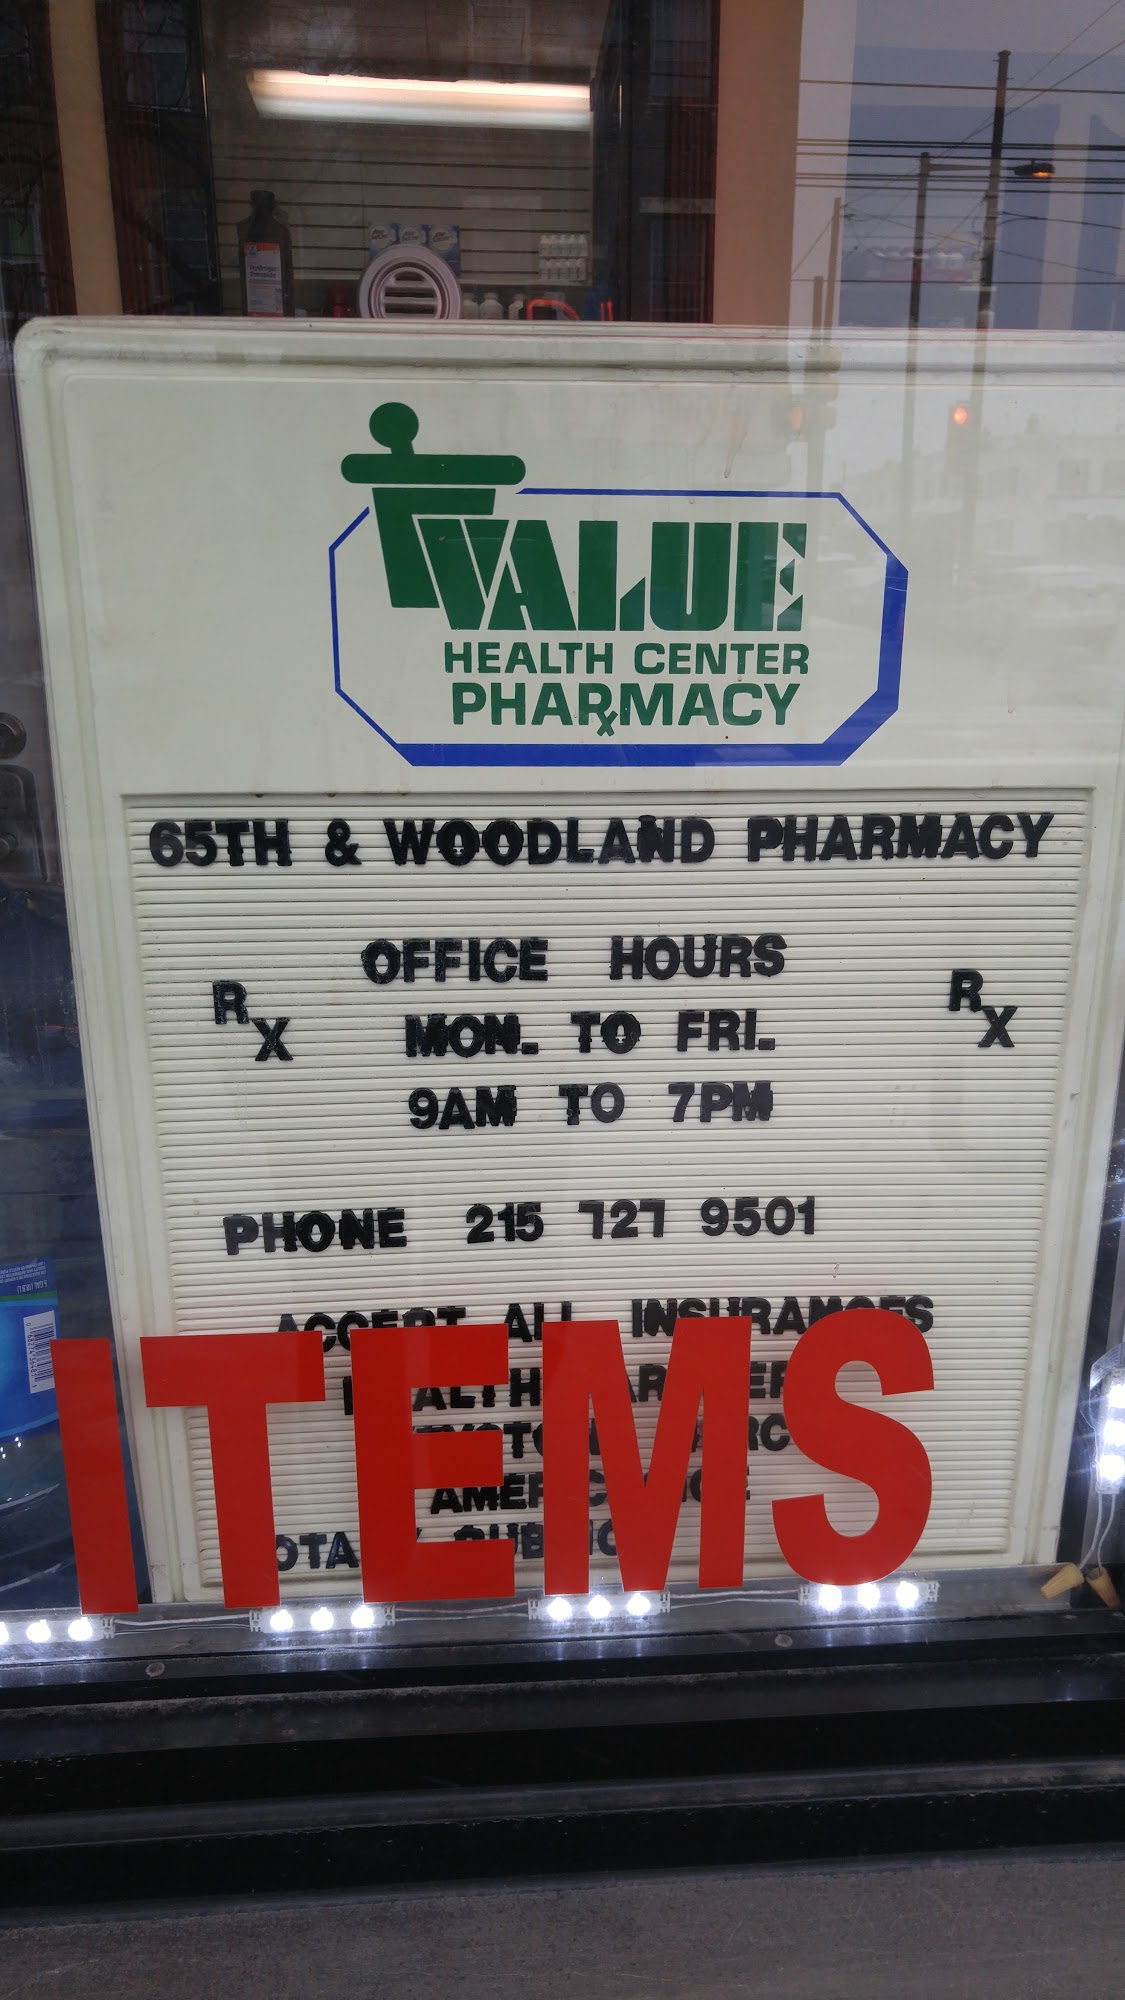 65th & Woodland Pharmacy